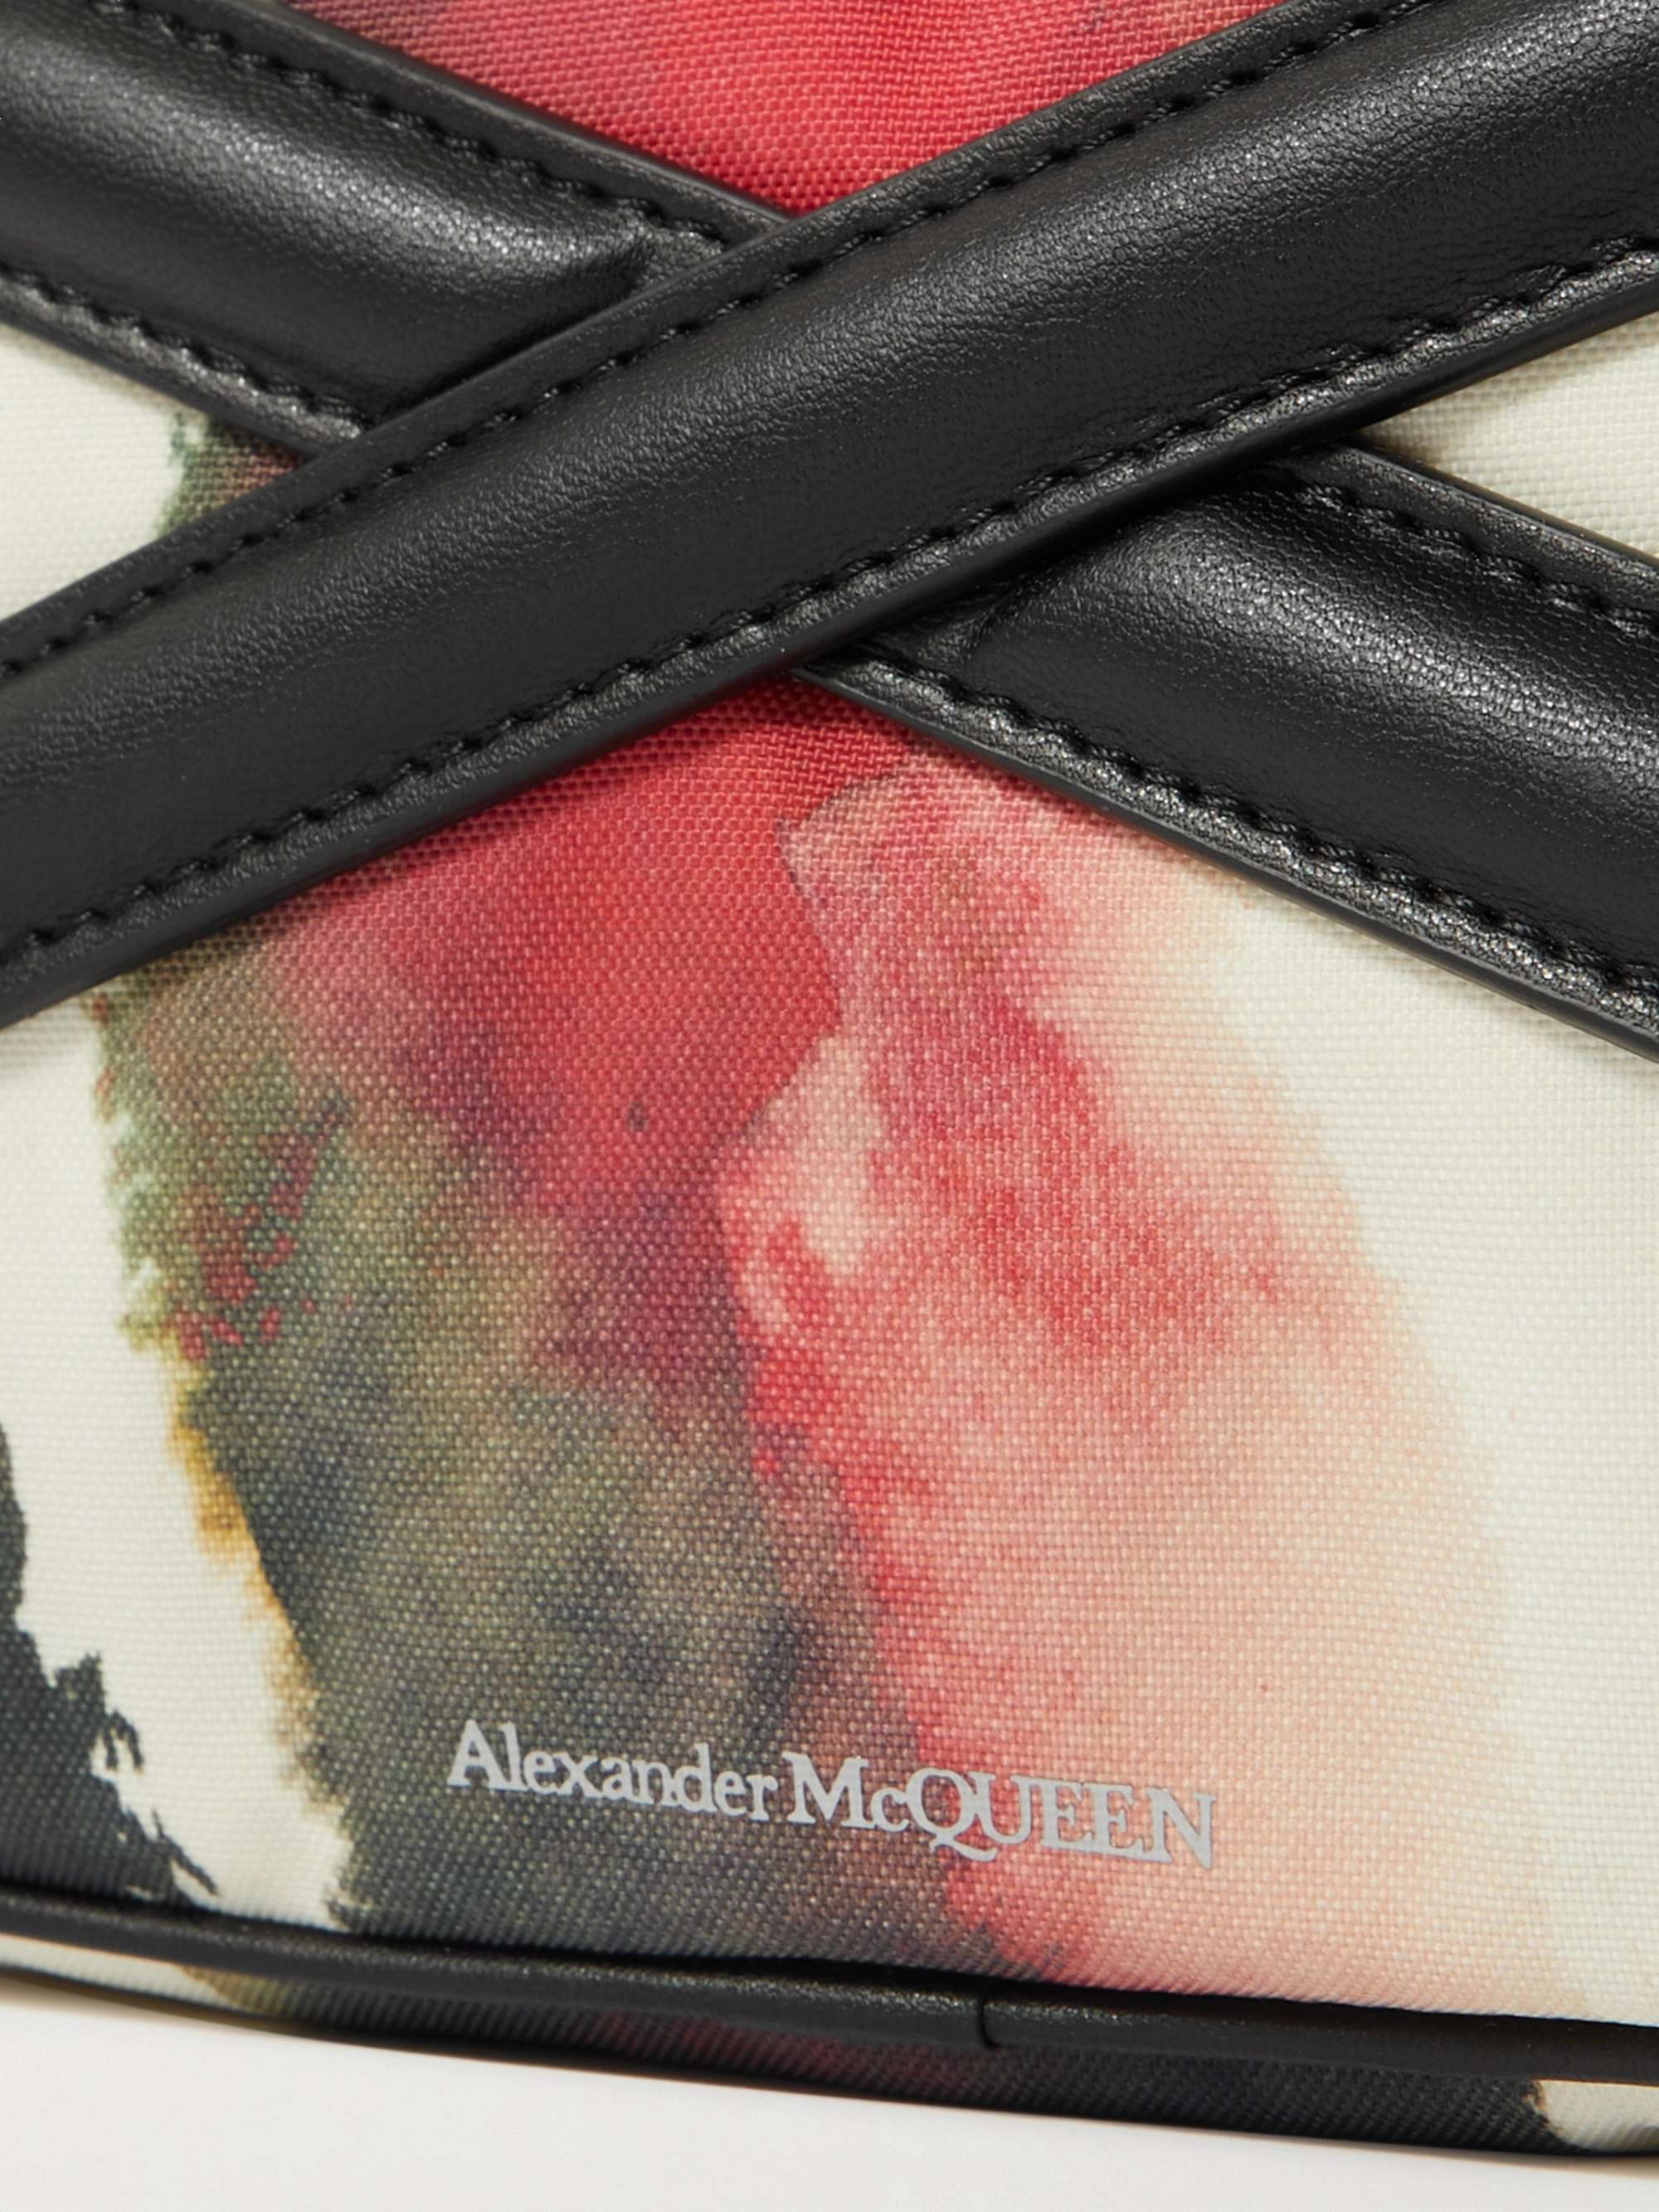 ALEXANDER MCQUEEN Leather-Trimmed Printed Nylon Messenger Bag